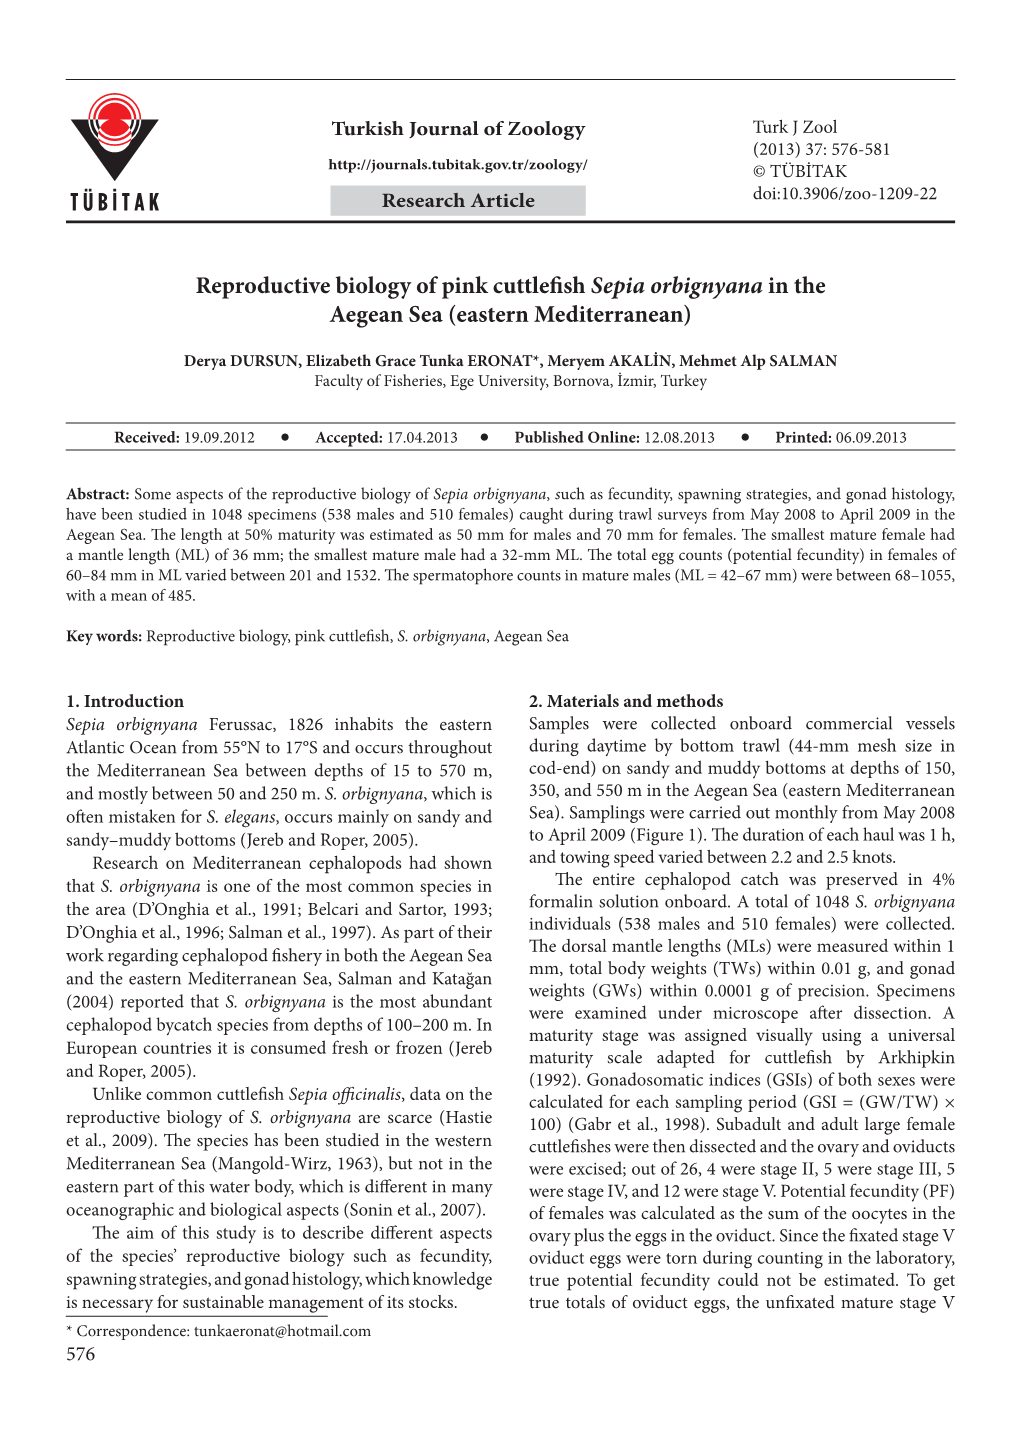 Reproductive Biology of Pink Cuttlefish Sepia Orbignyana in the Aegean Sea (Eastern Mediterranean)